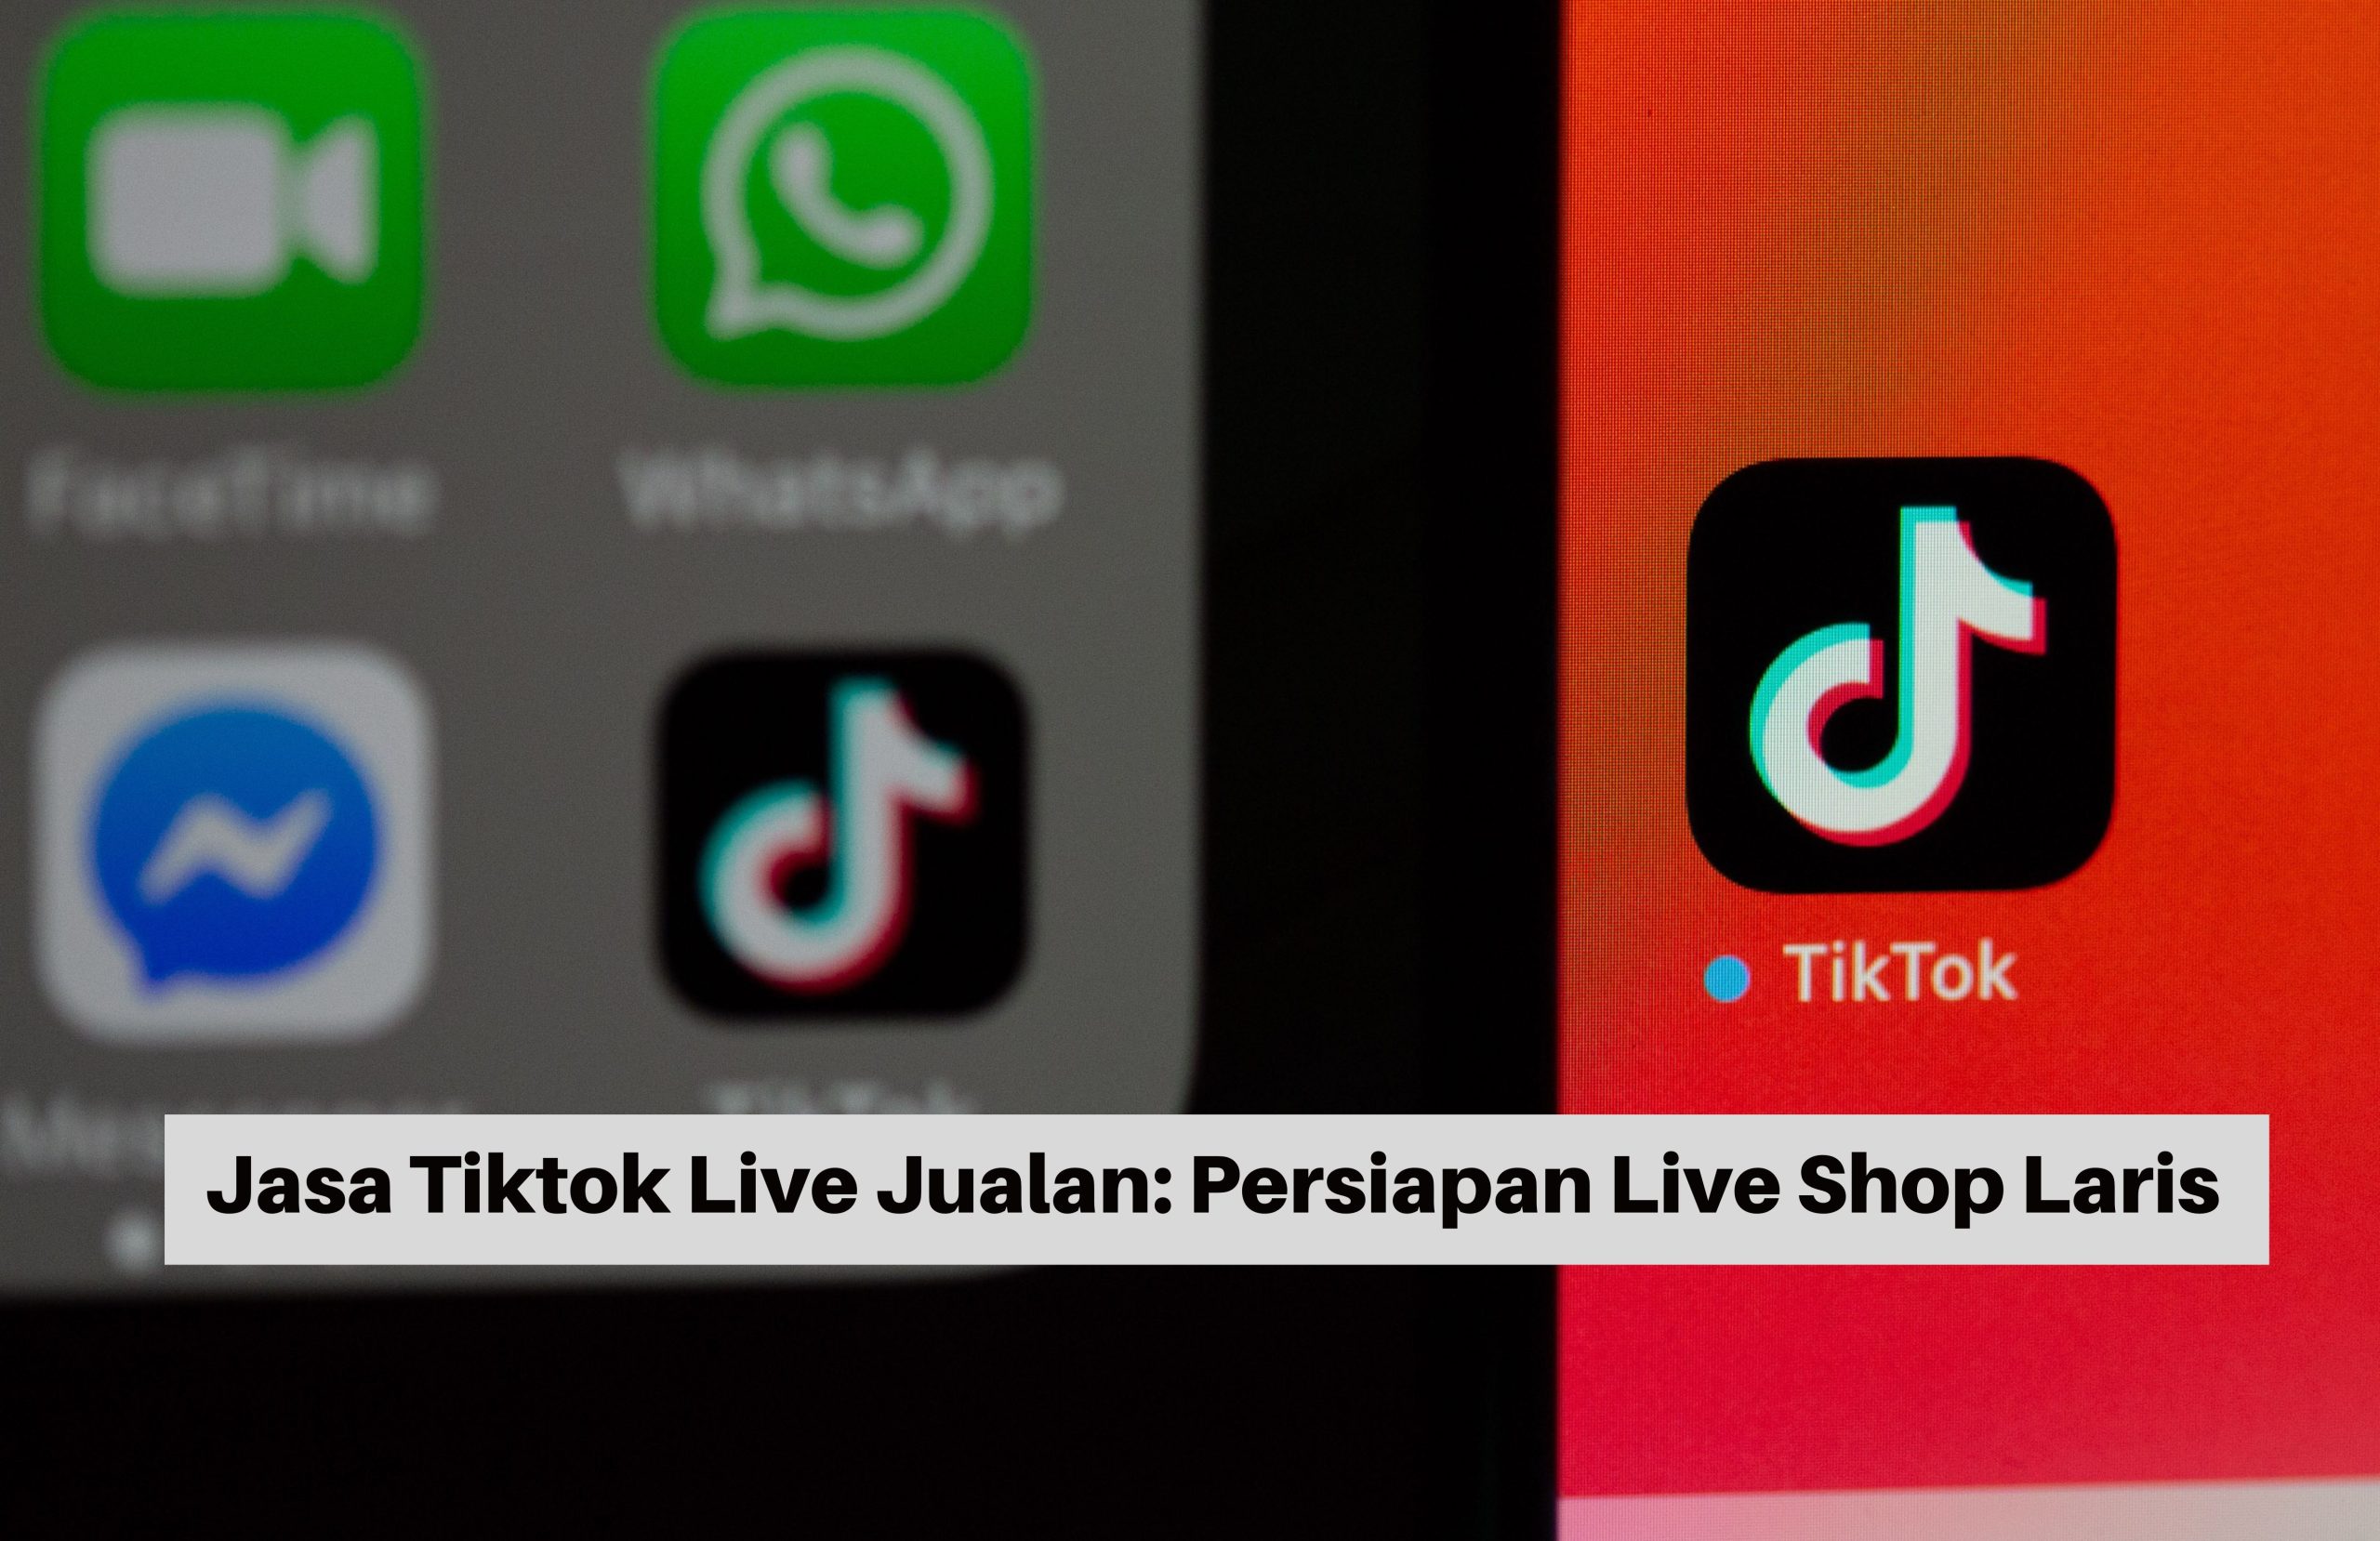 Jasa Tiktok Live Jualan Persiapan Live Shop Laris